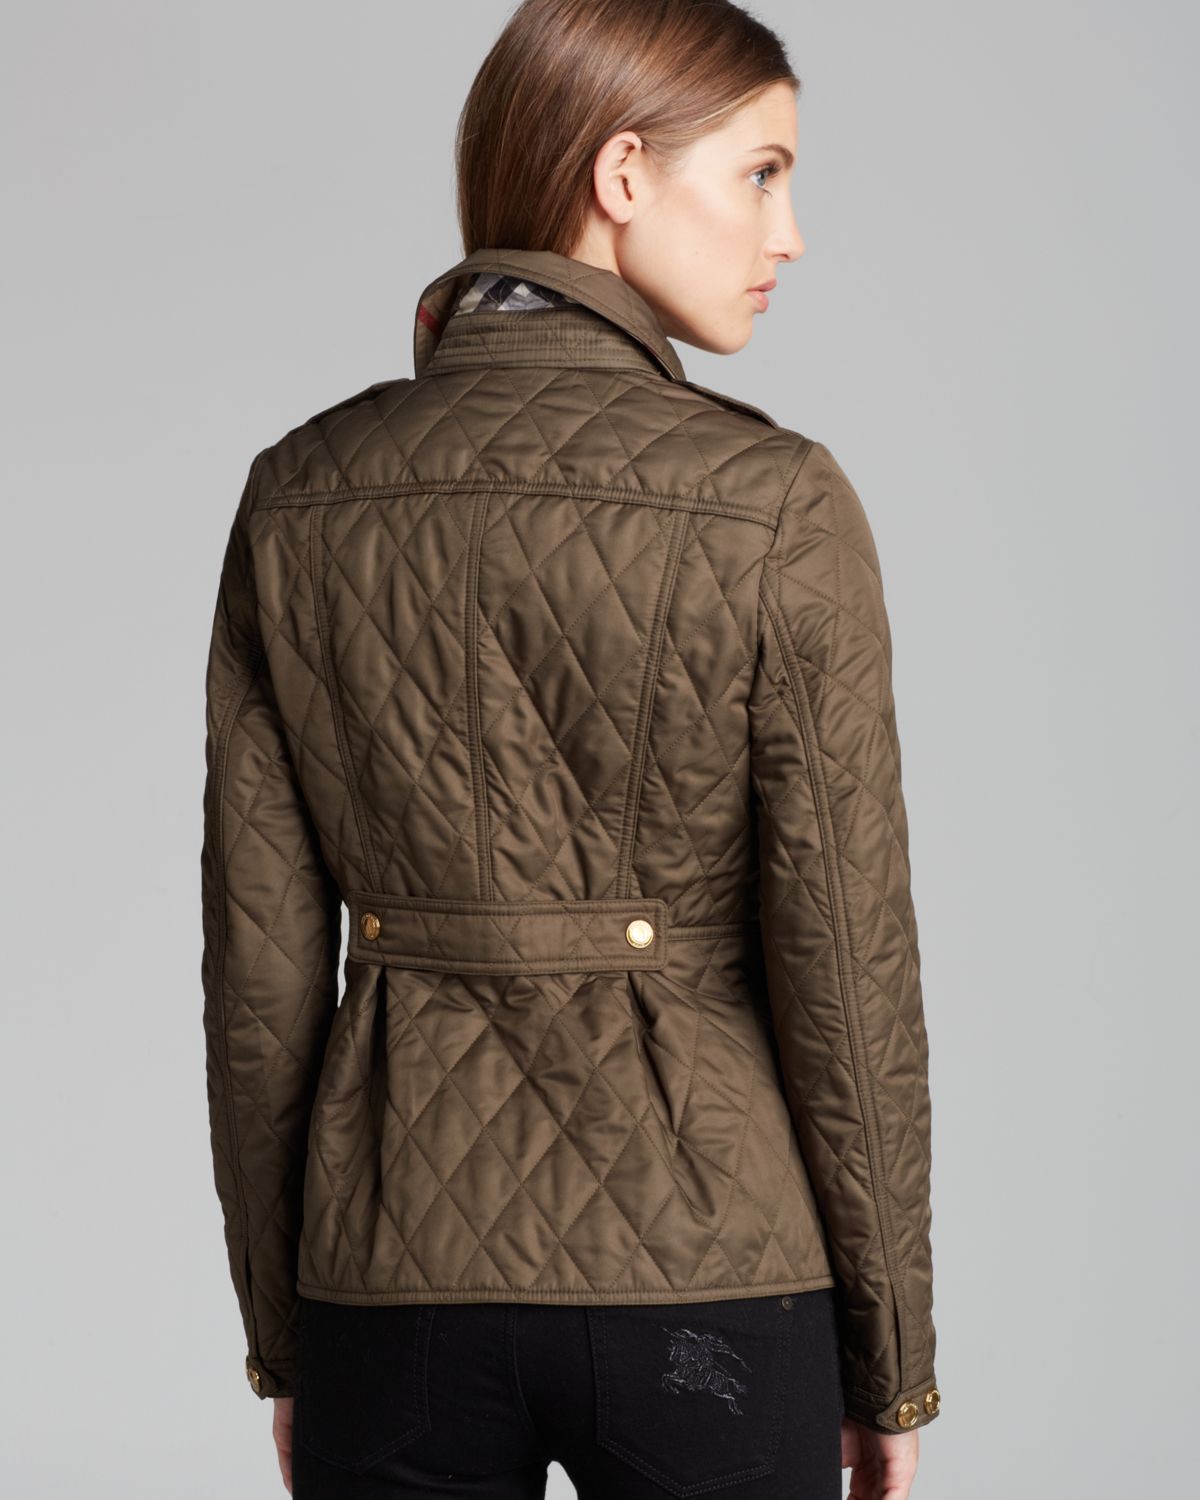 burberry women's jackets